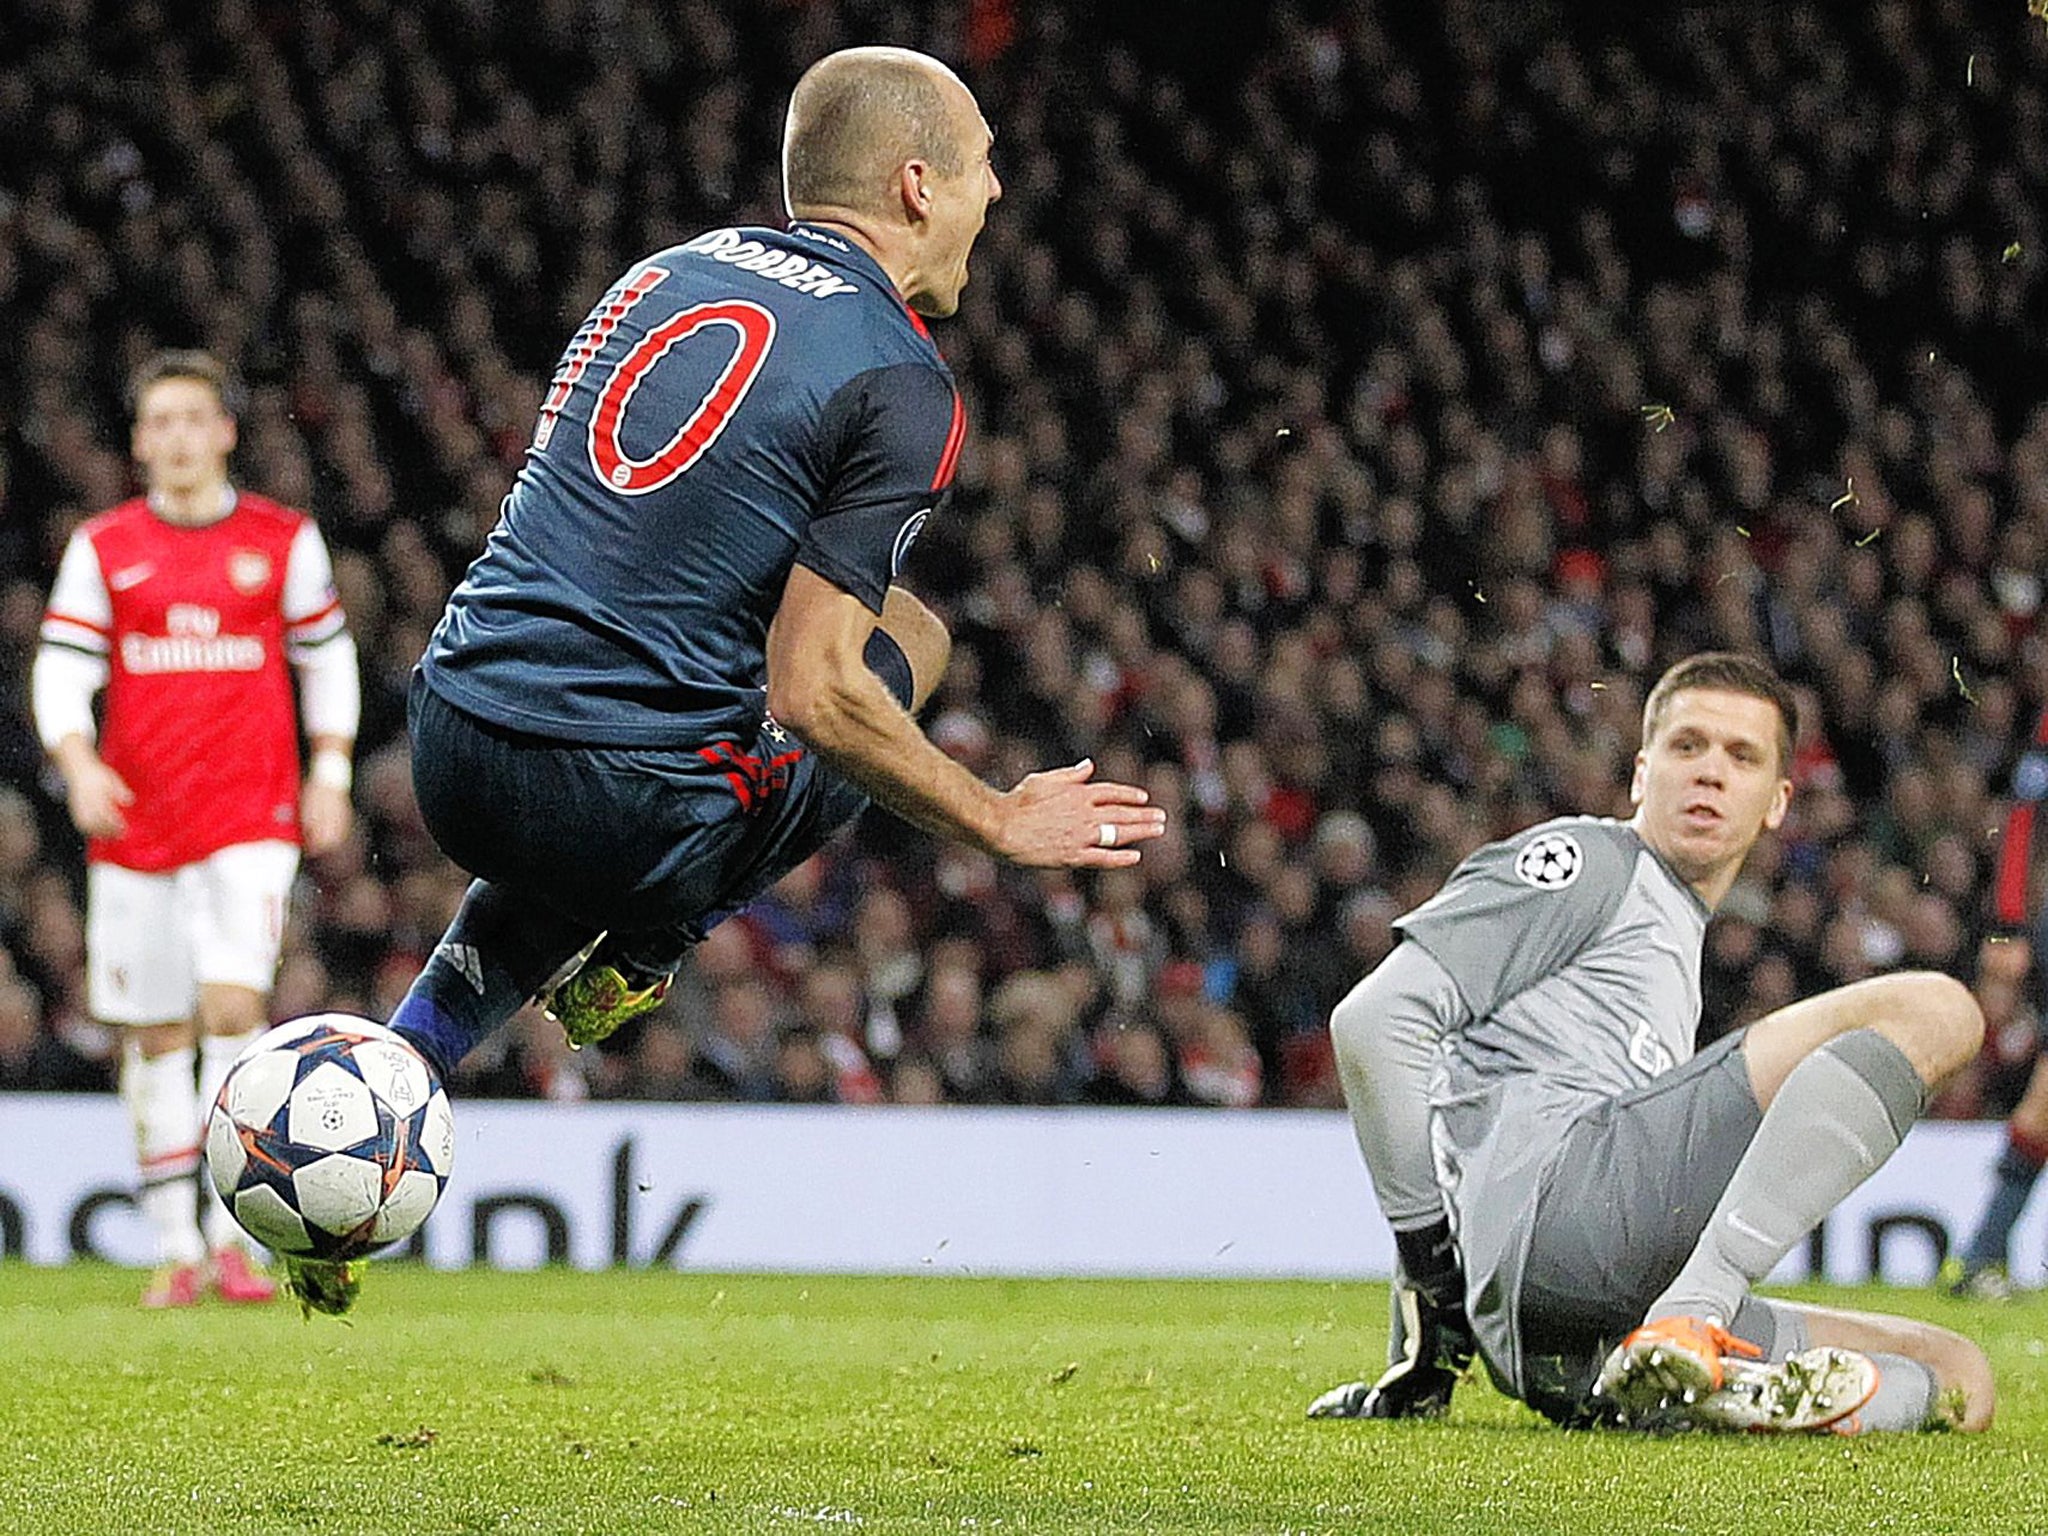 Arjen Robben is brought down by Wojciech Szczesny during Bayern Munich's 2-0 victory over Arsenal